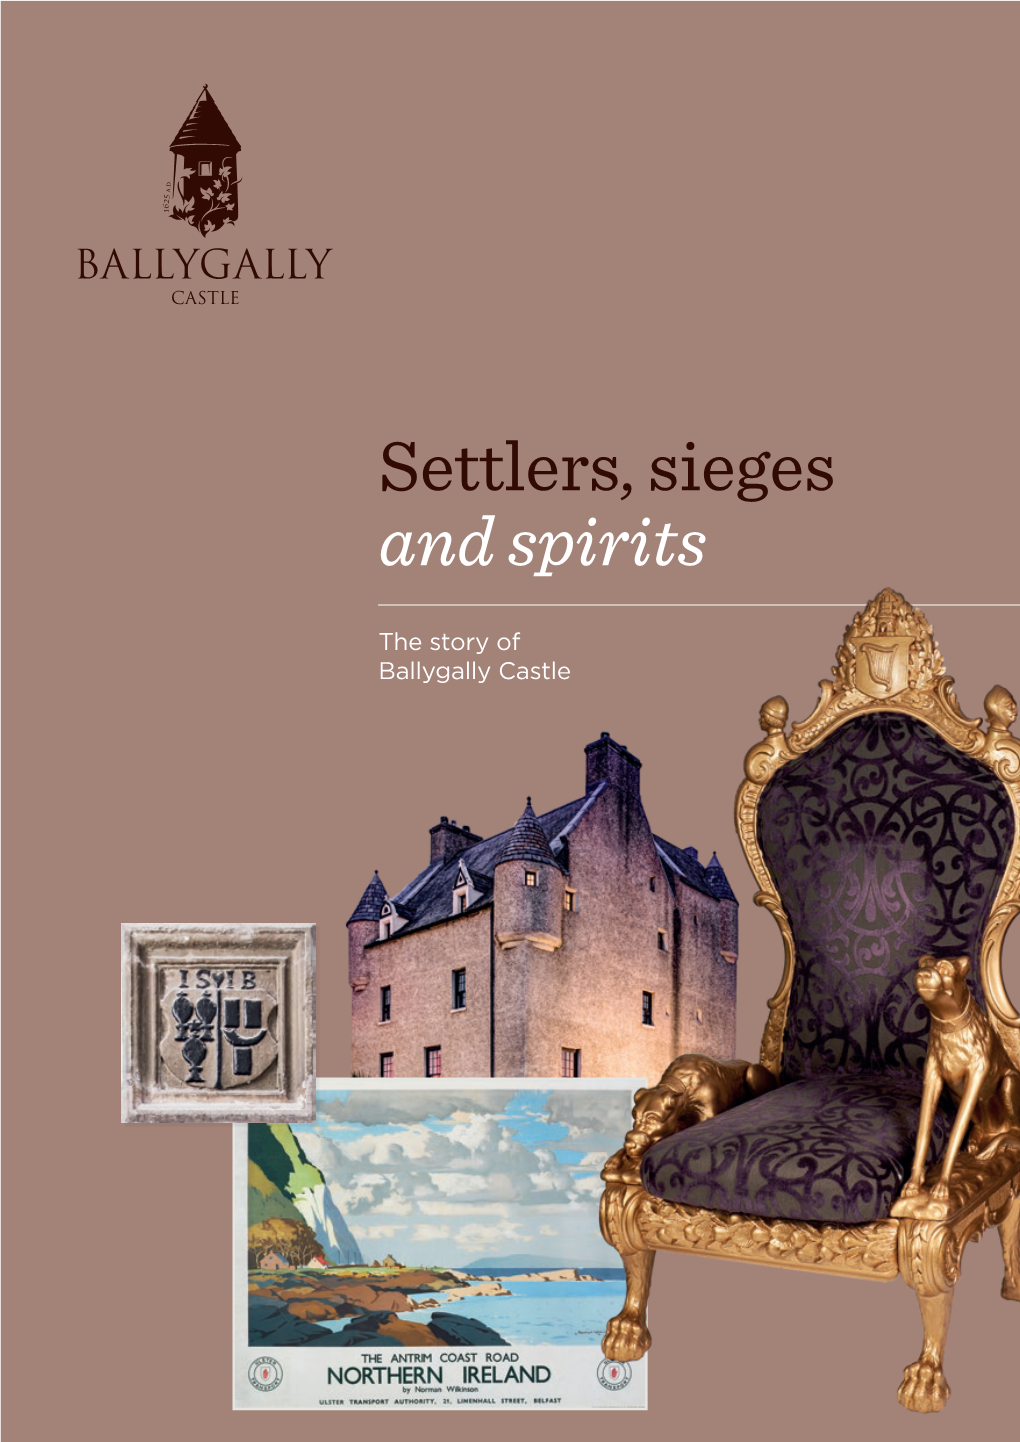 The History of Ballygally